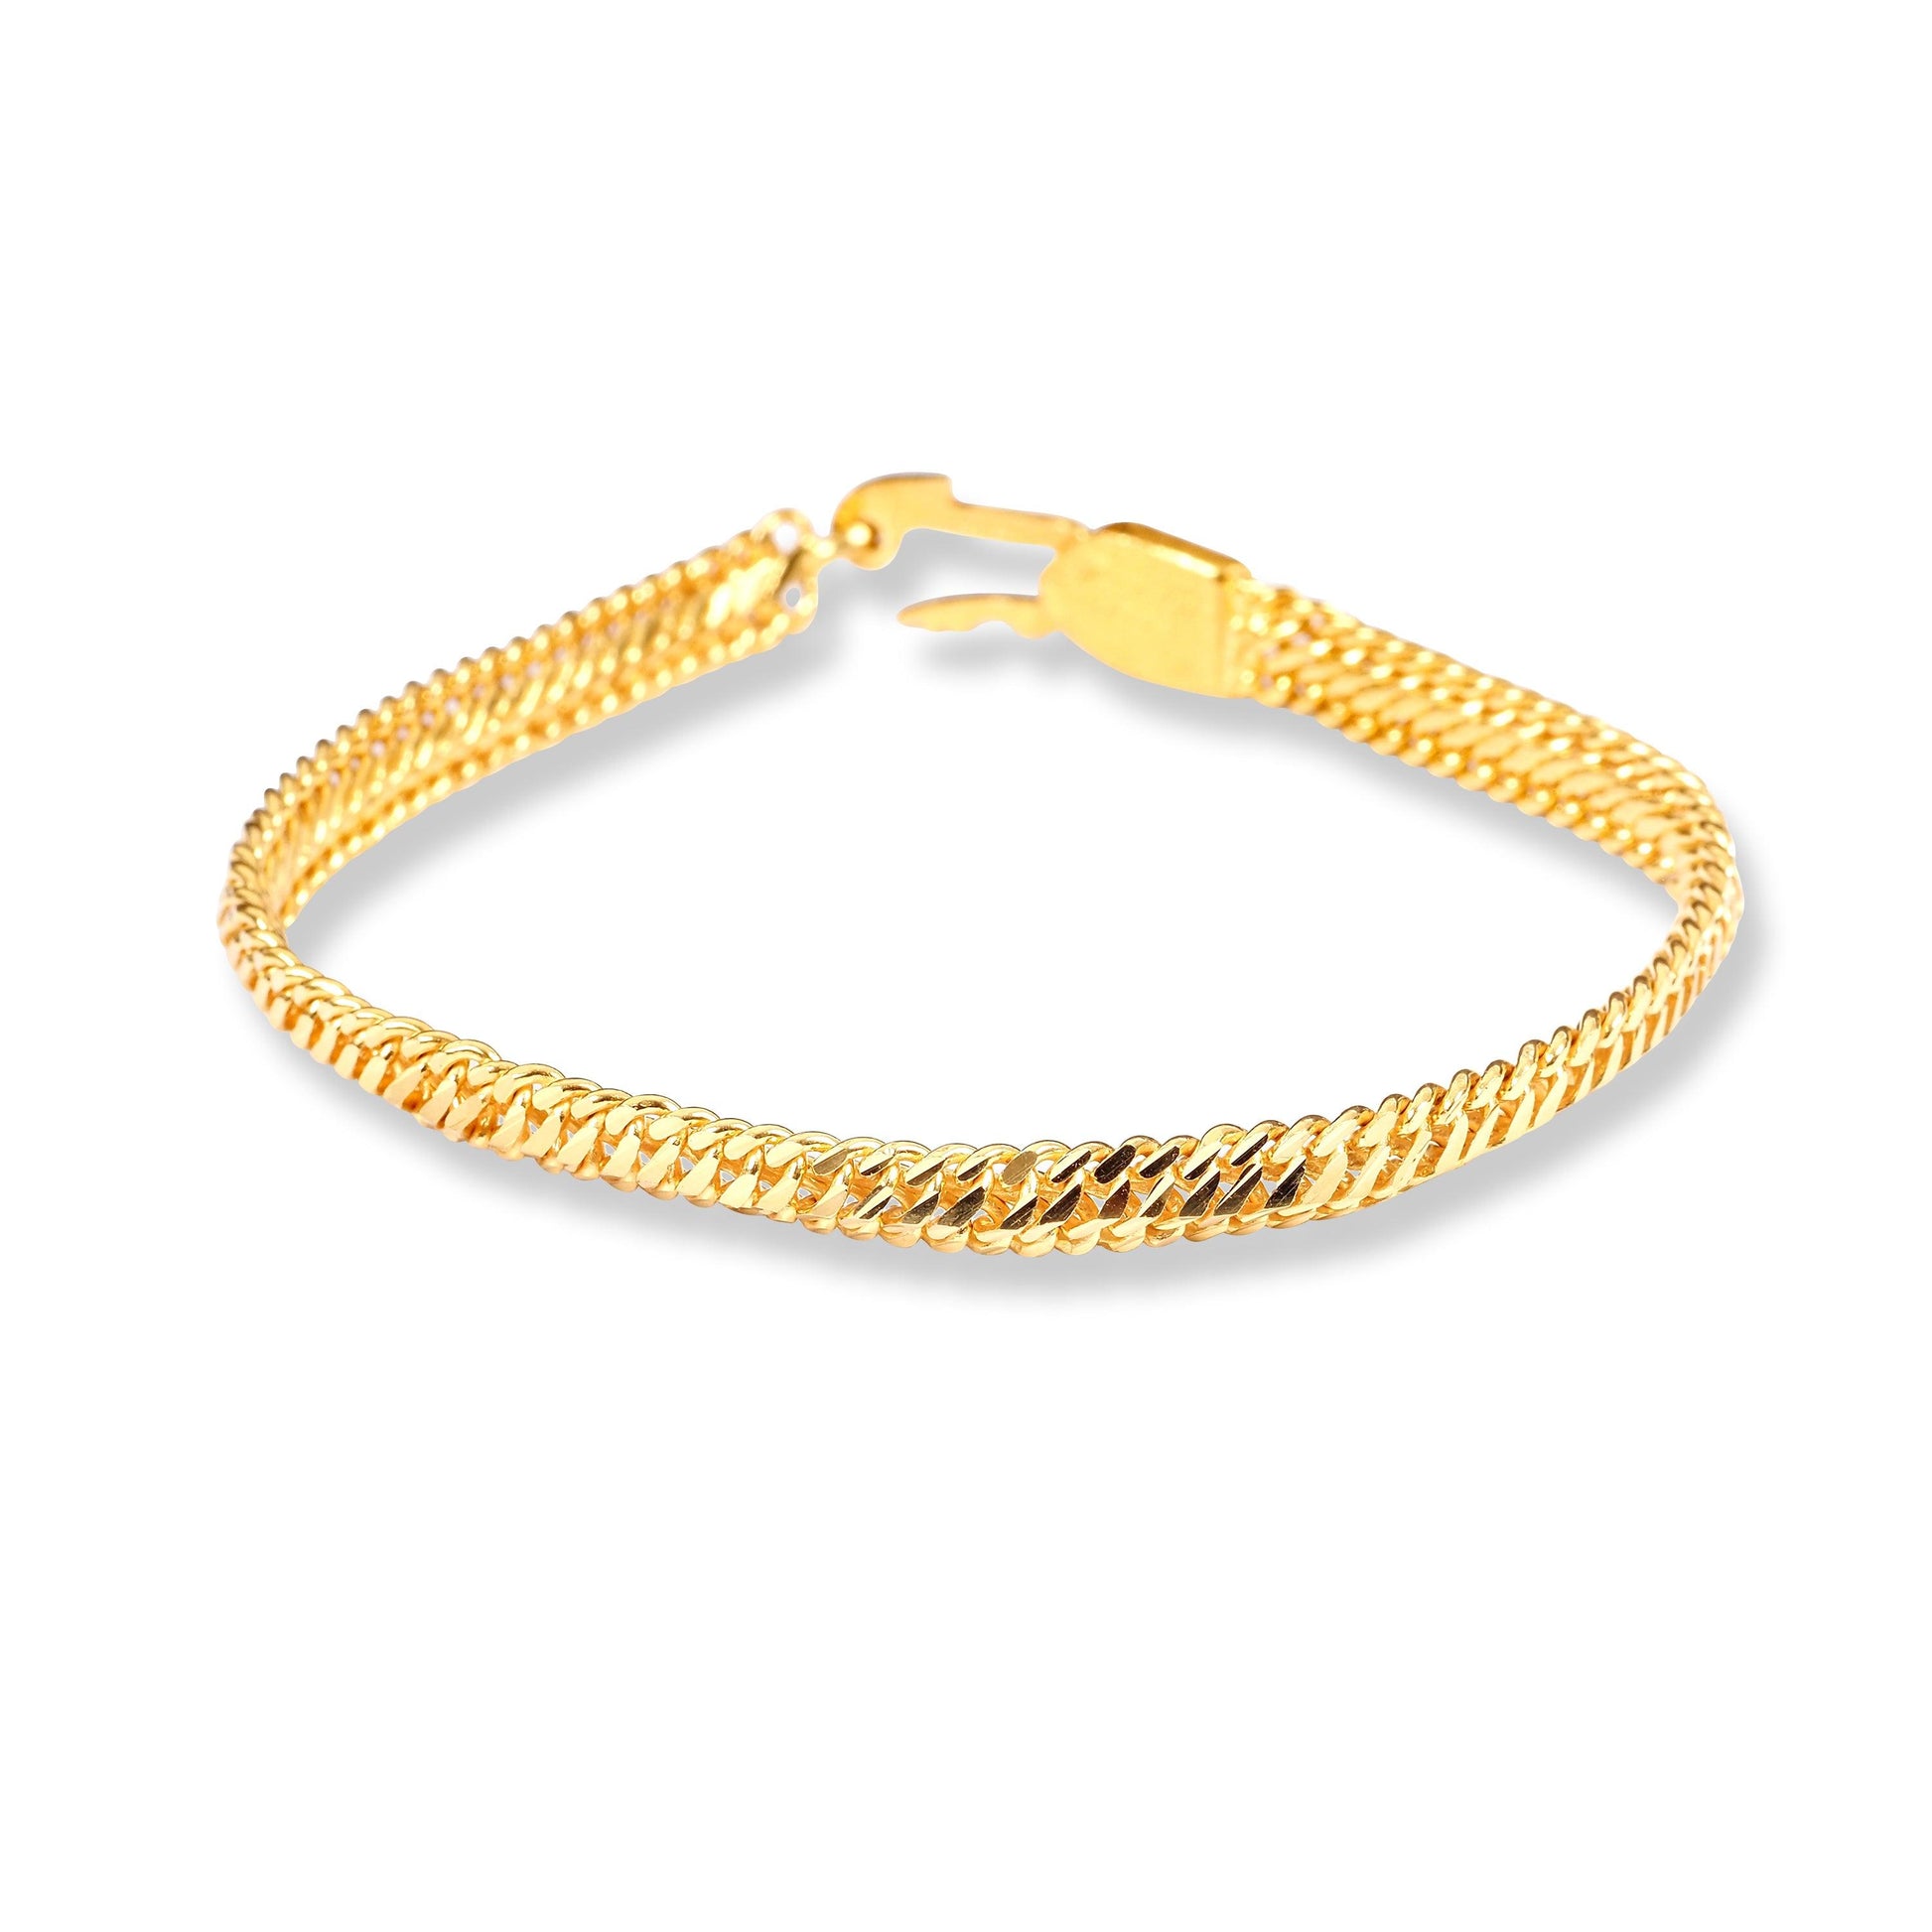 22ct Gold Gents Bracelet with U Push Clasp GBR-8325 - Minar Jewellers